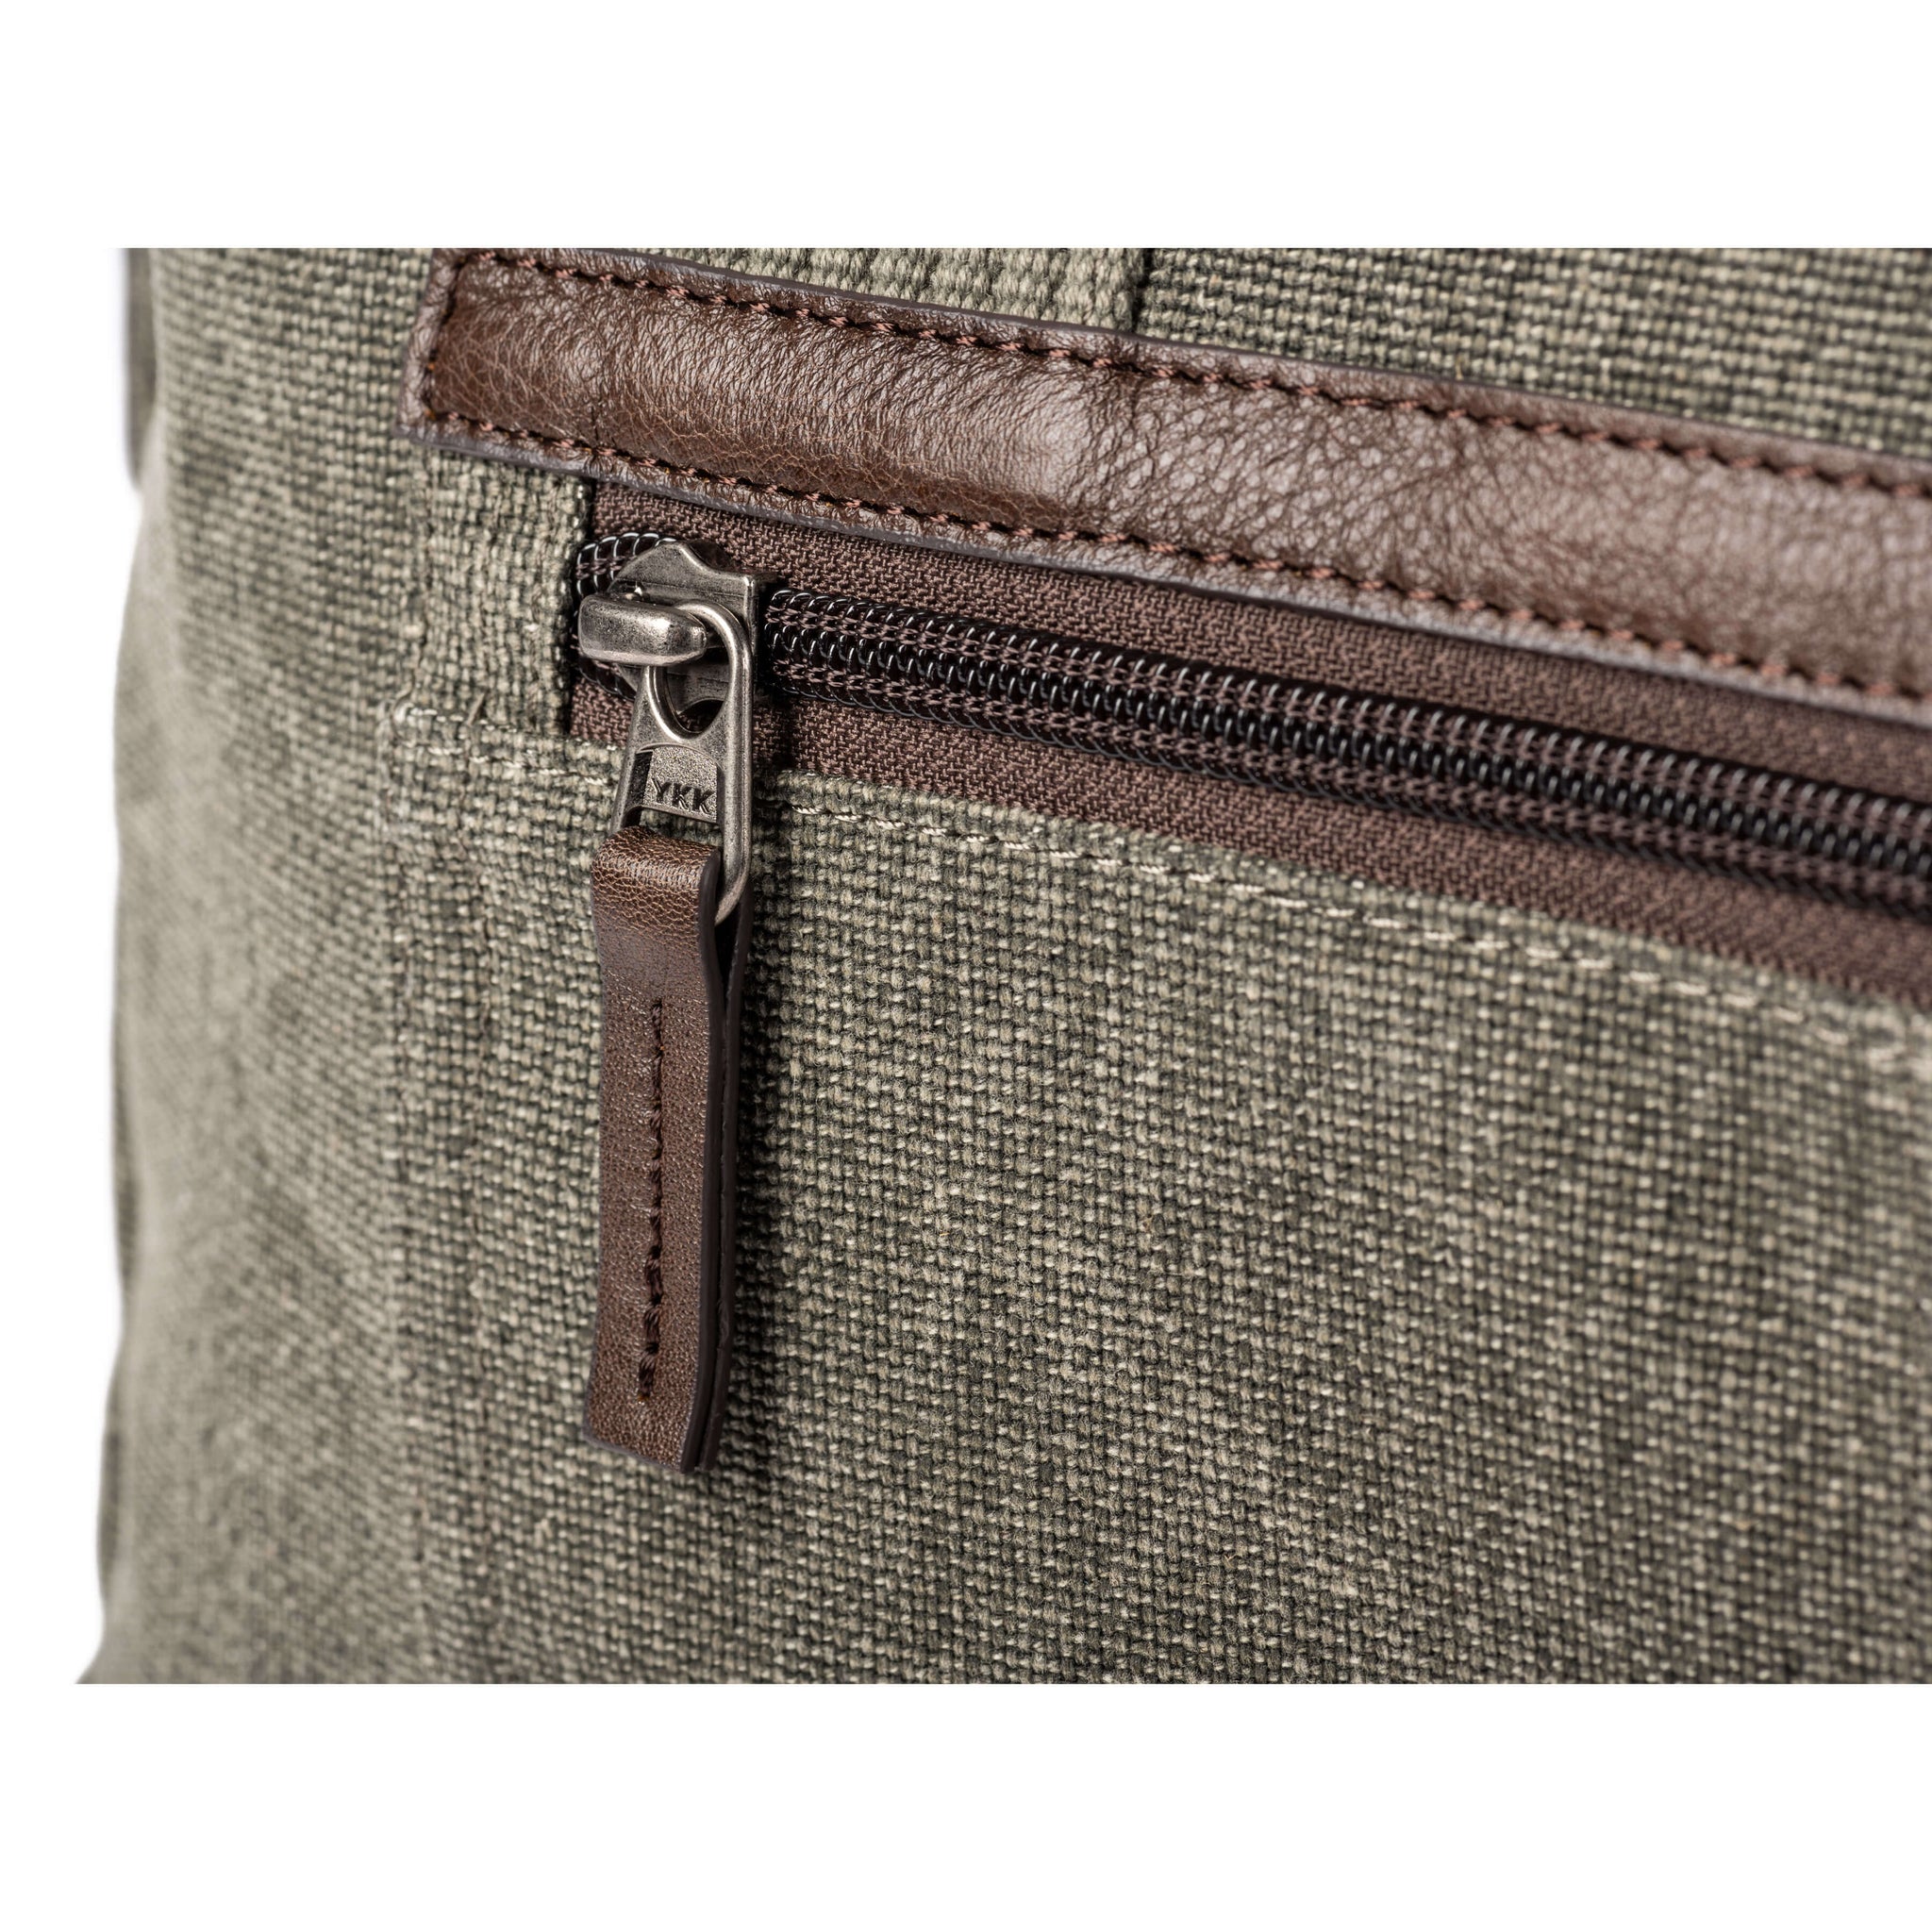 Full-grain leather zipper pulls